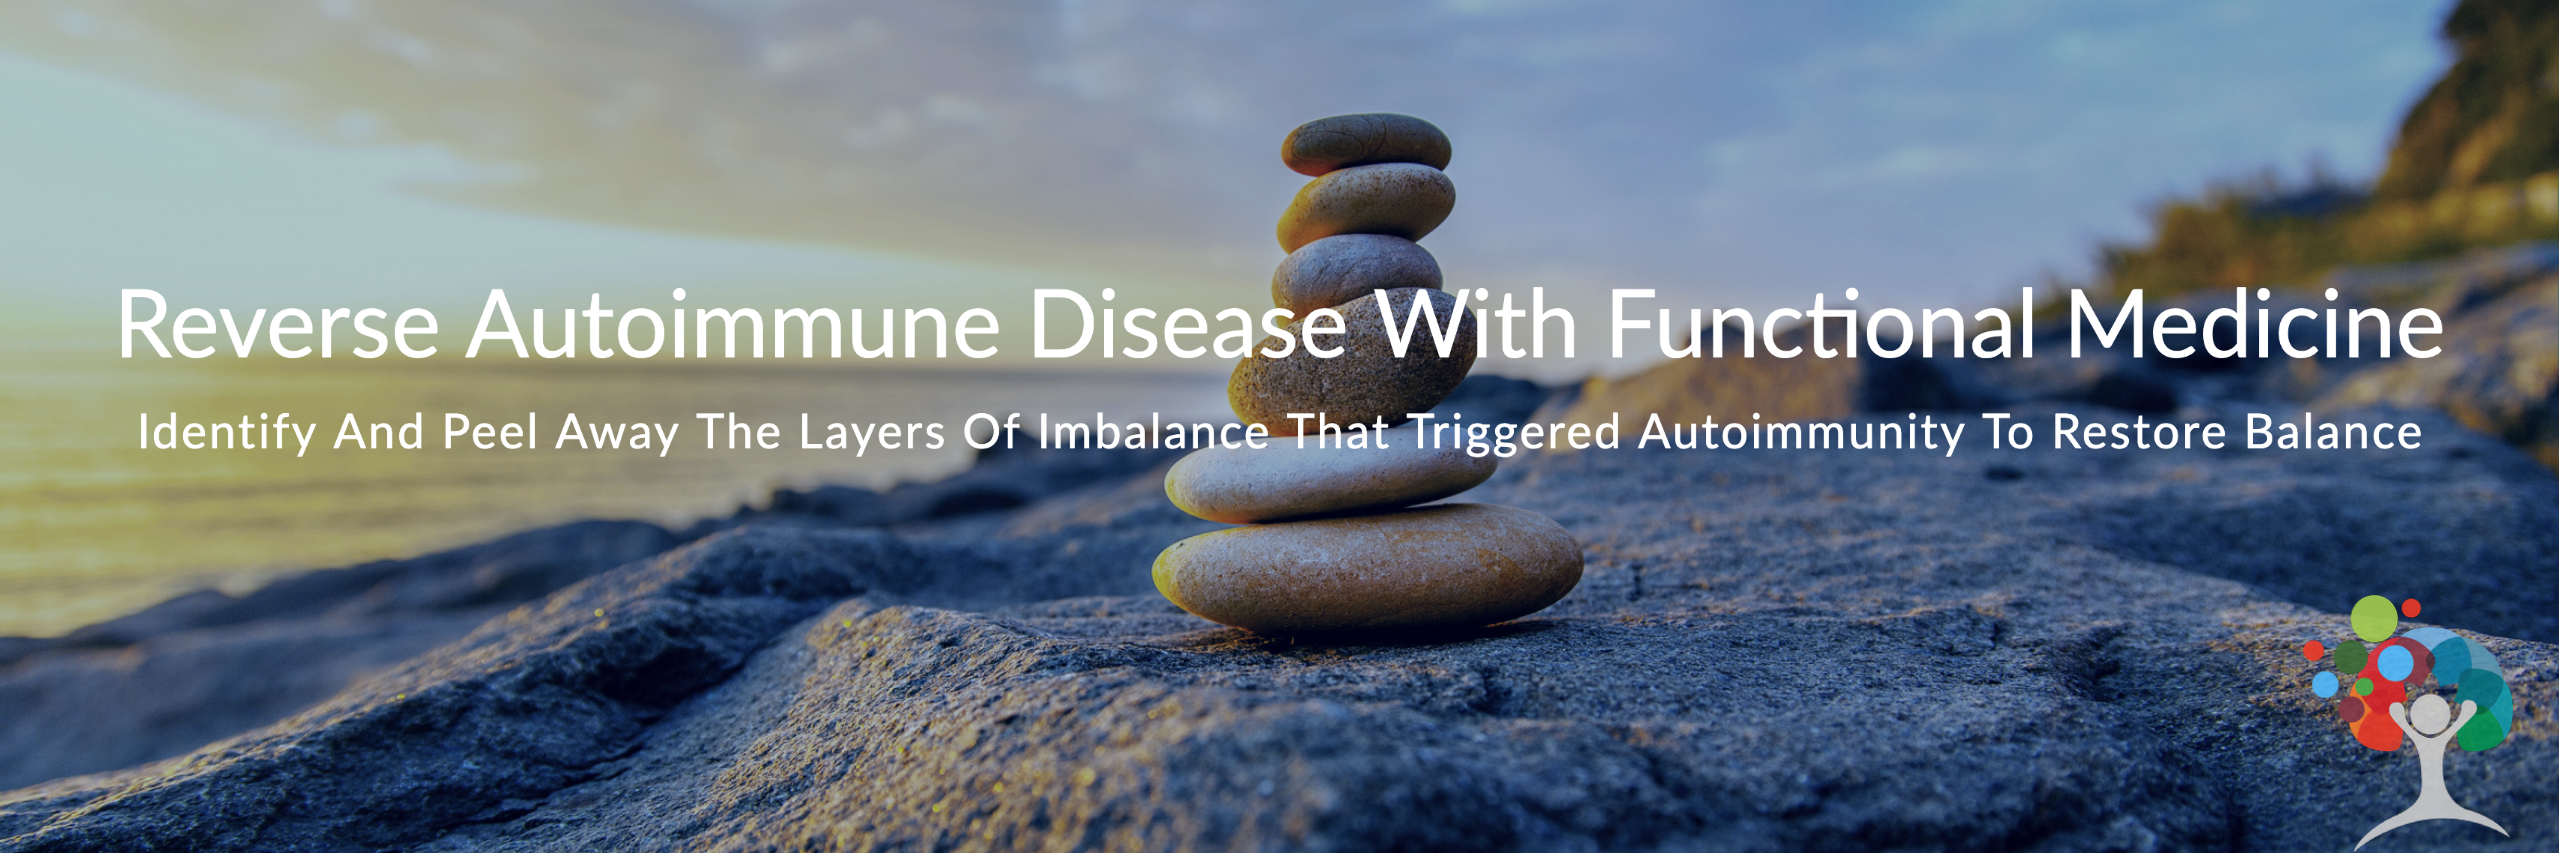 Reverse Autoimmune Disease With Functional Medicine